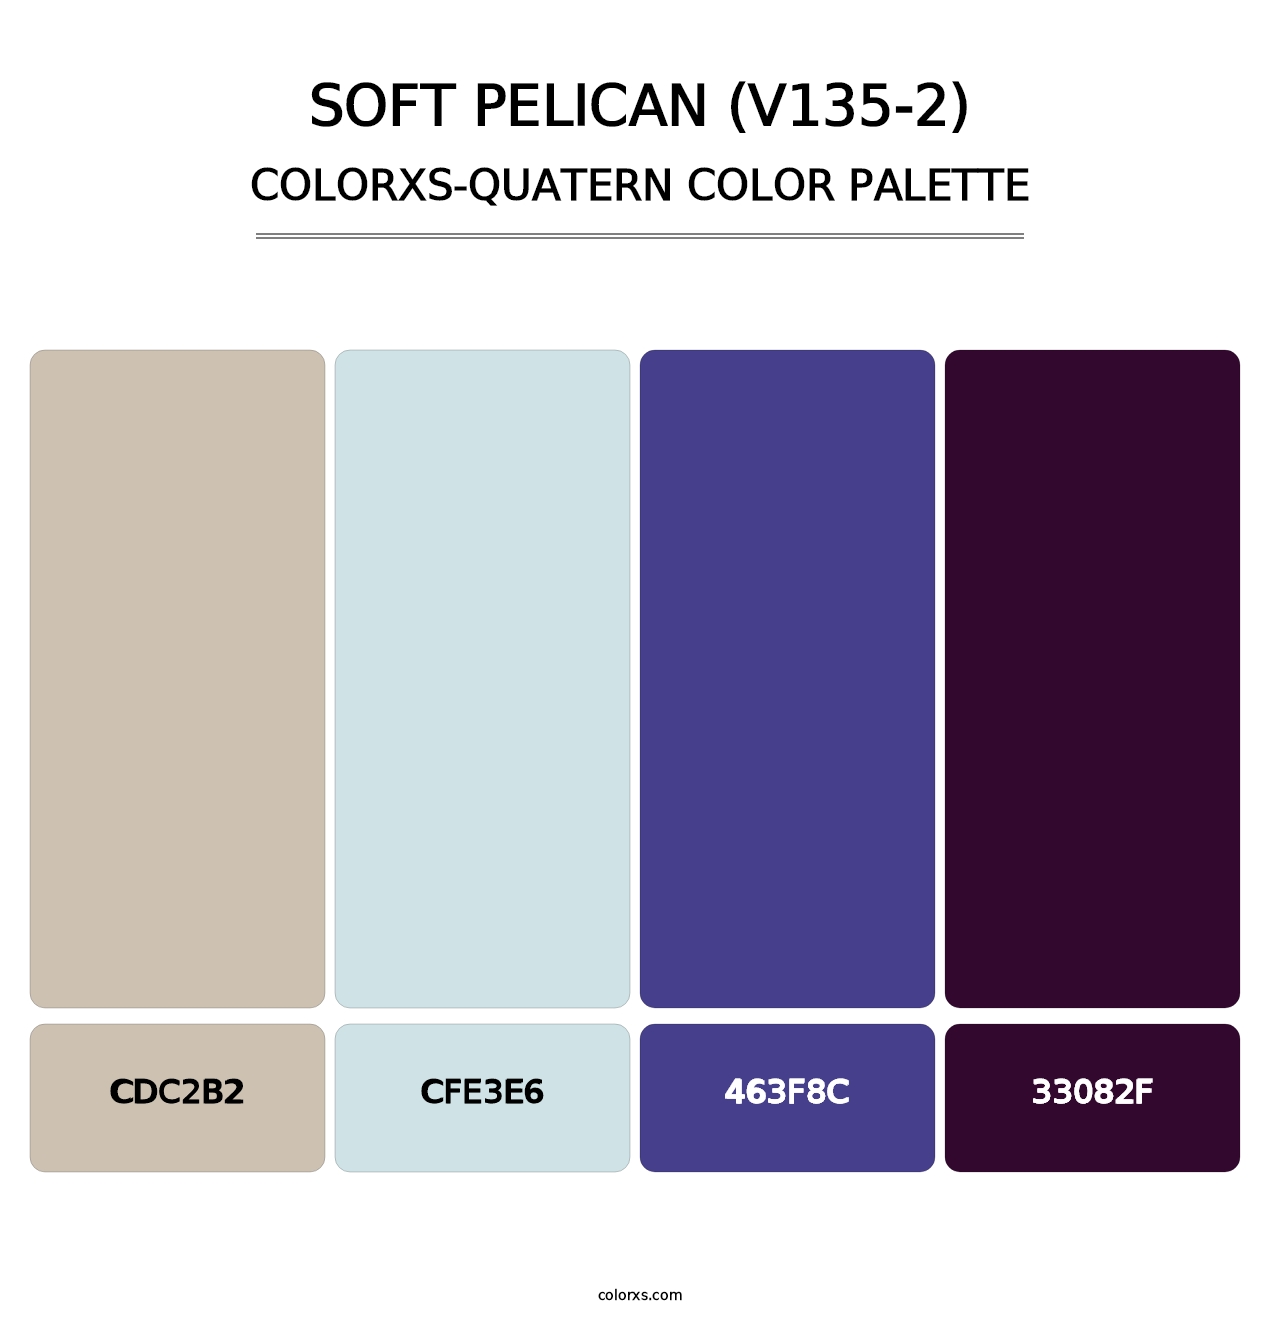 Soft Pelican (V135-2) - Colorxs Quatern Palette